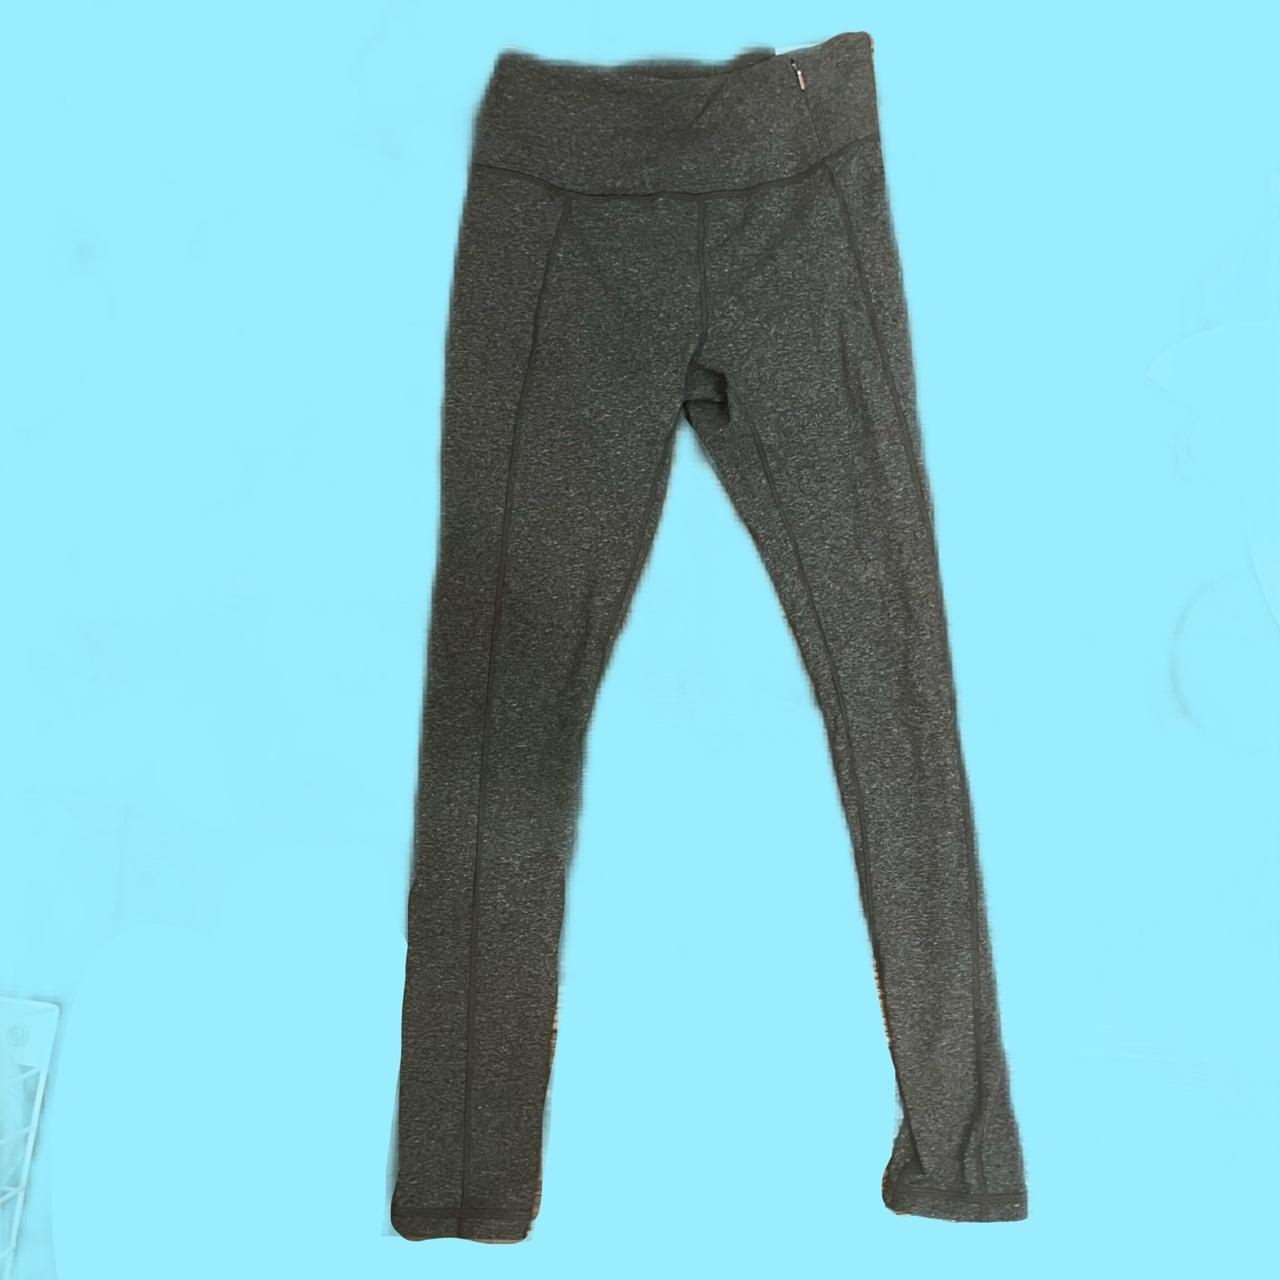 Grey essentials Calia high rise leggings Adorable - Depop